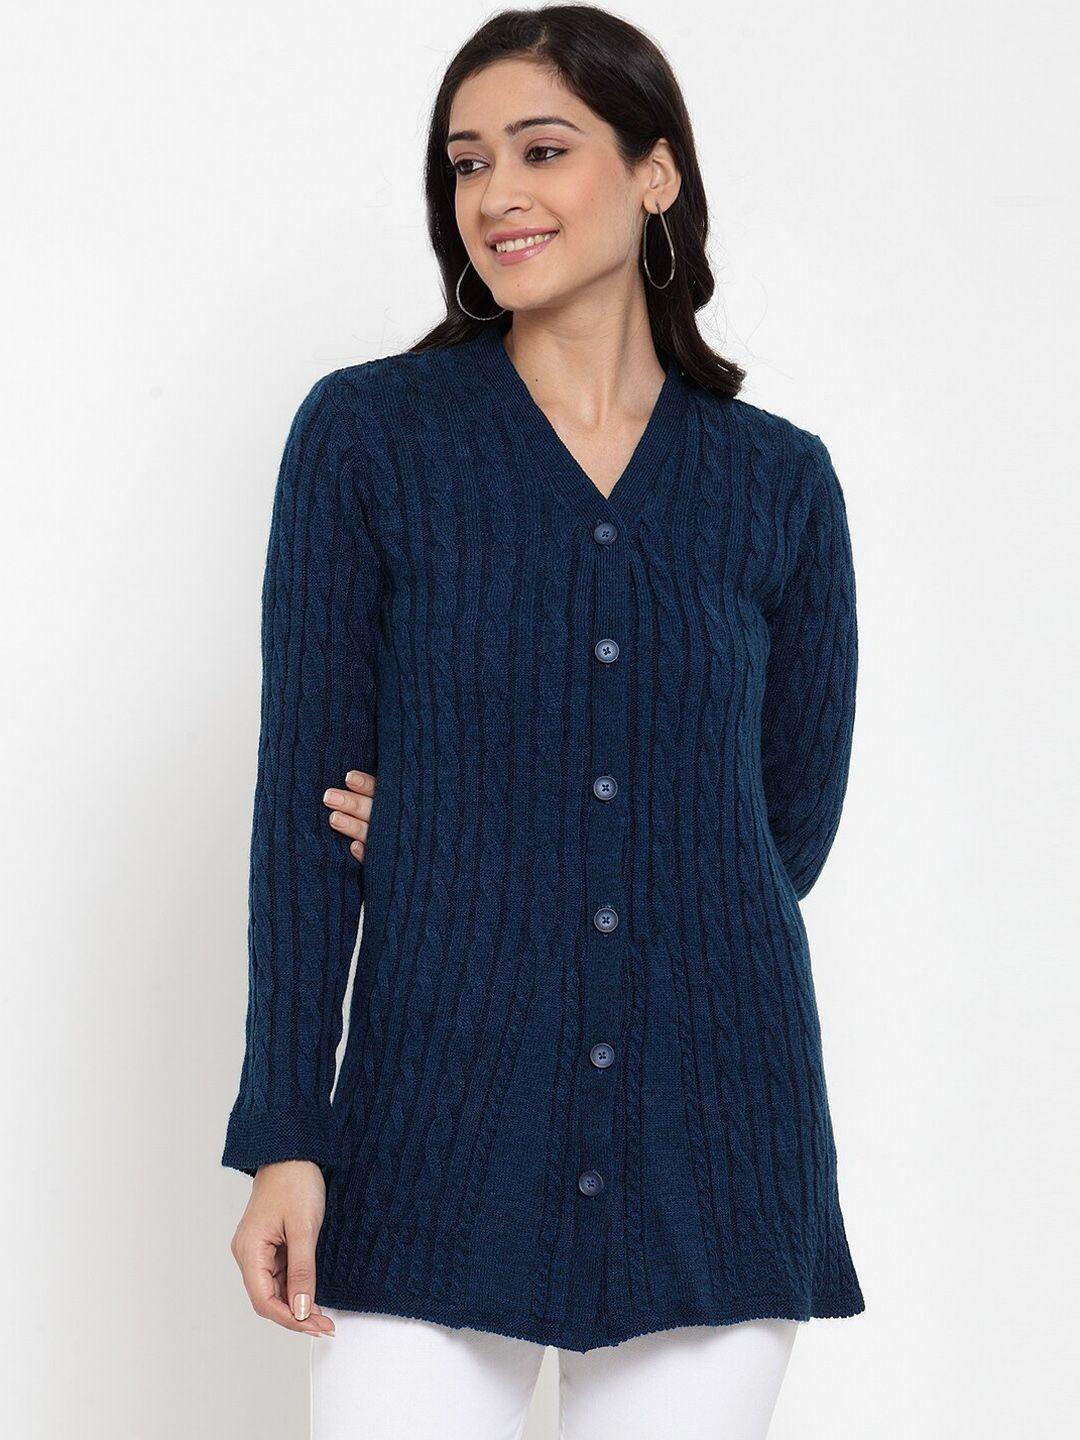 kalt women teal blue self design cardigan sweater